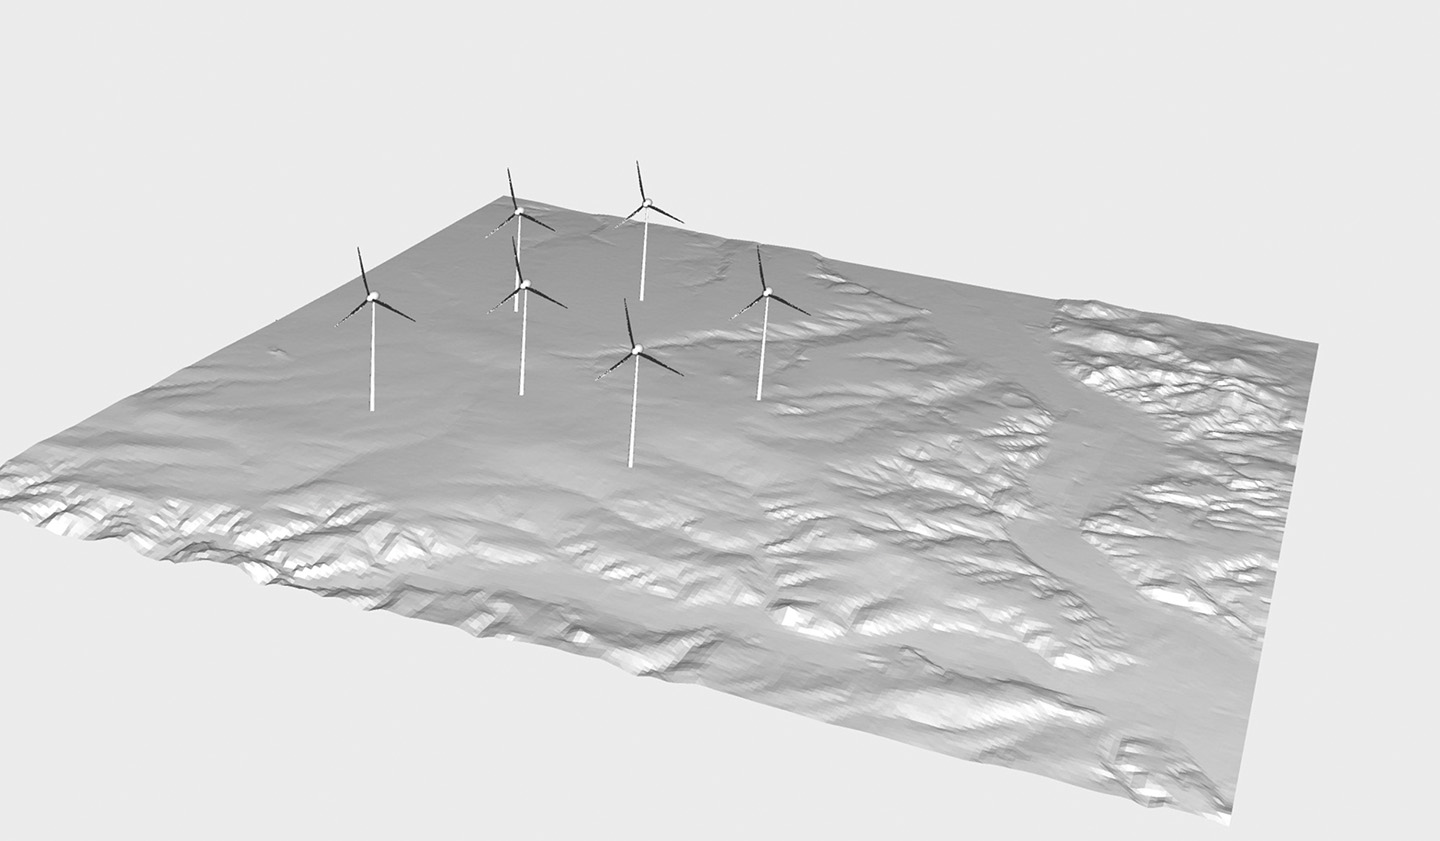 Terrain model with wind turbines (schematic representation, wind turbines are oversized).